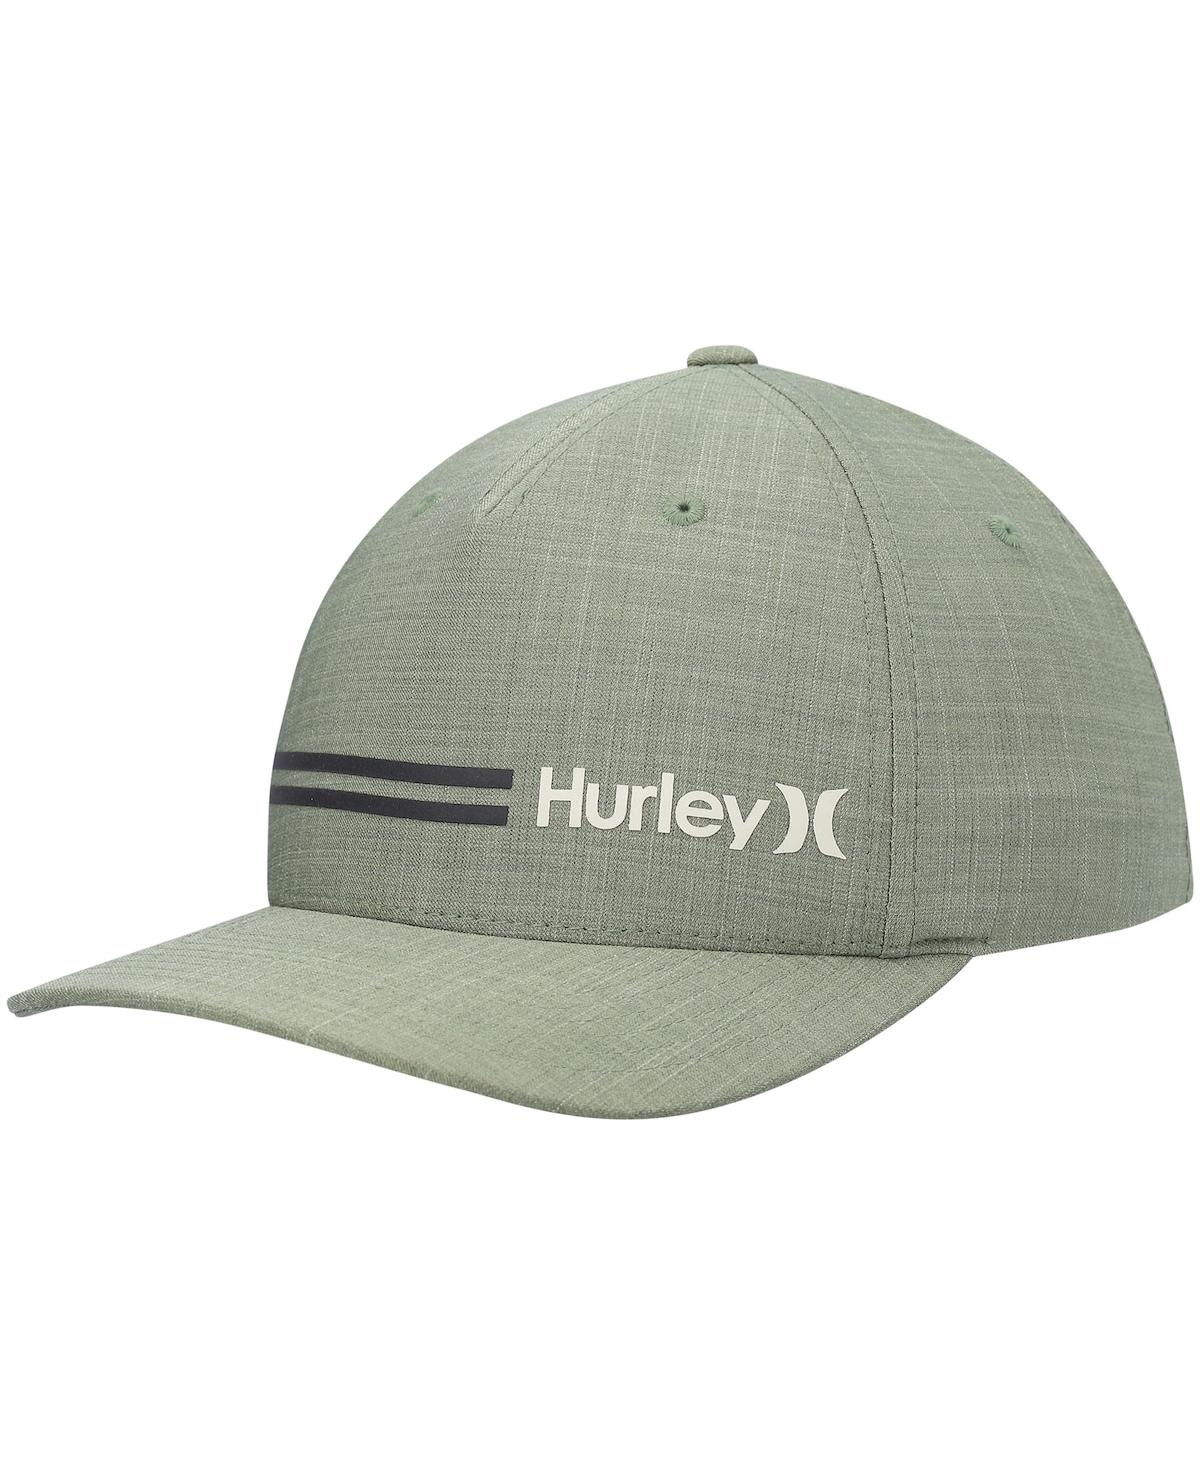 Hurley Men's  Green H20-dri Line Up Flex Hat